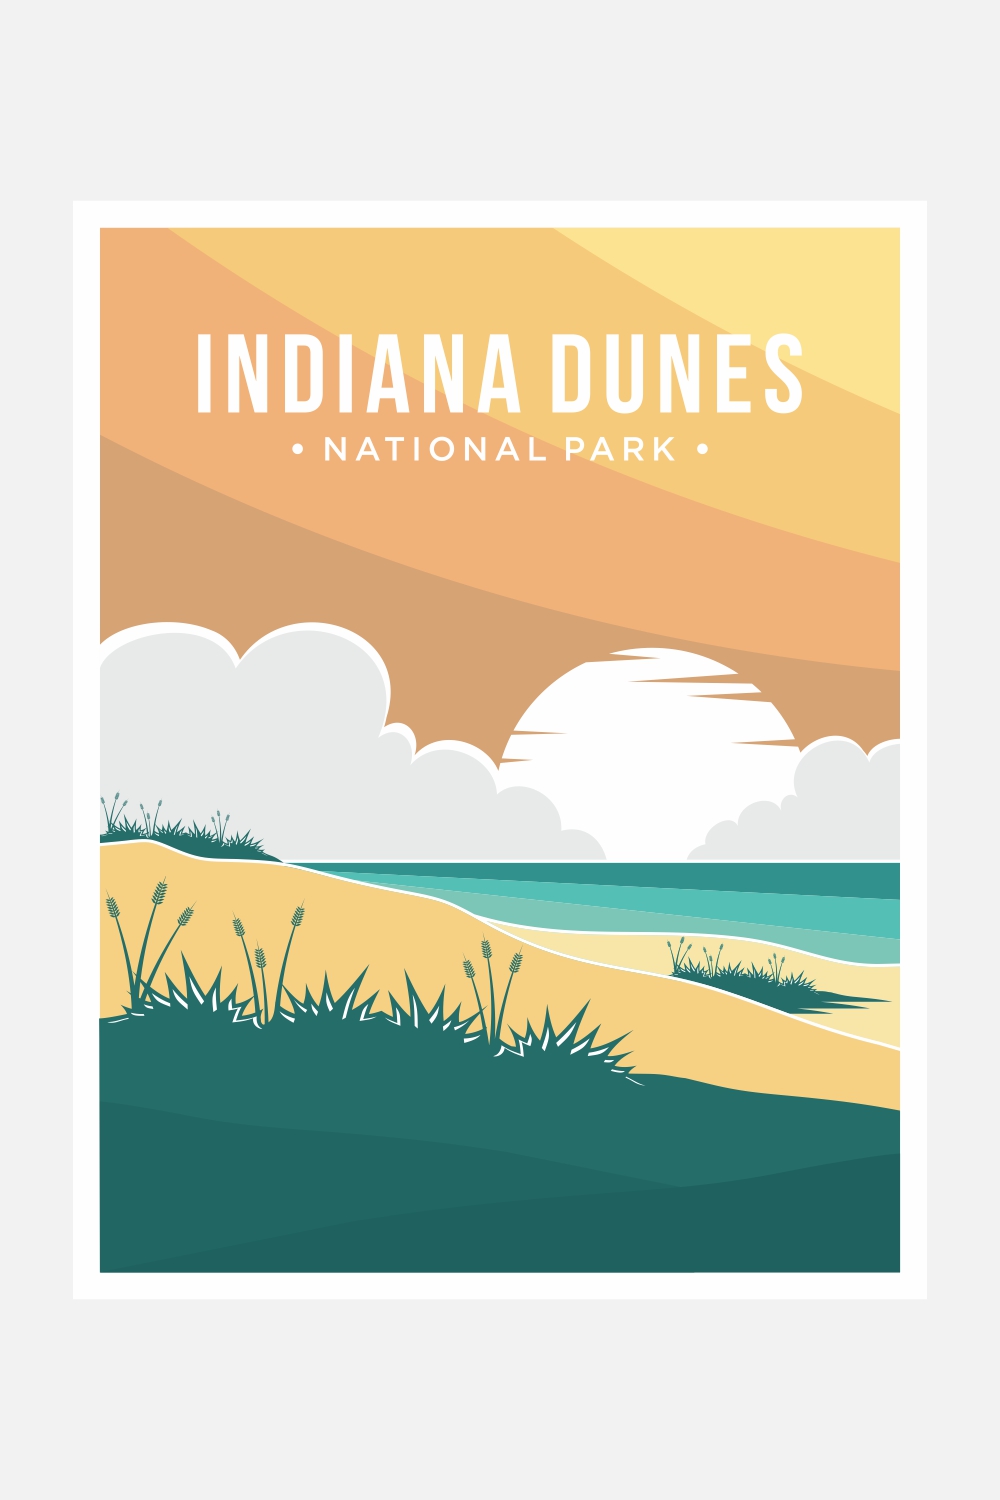 Indiana Dunes national park poster vector illustration design – Only $8 pinterest preview image.